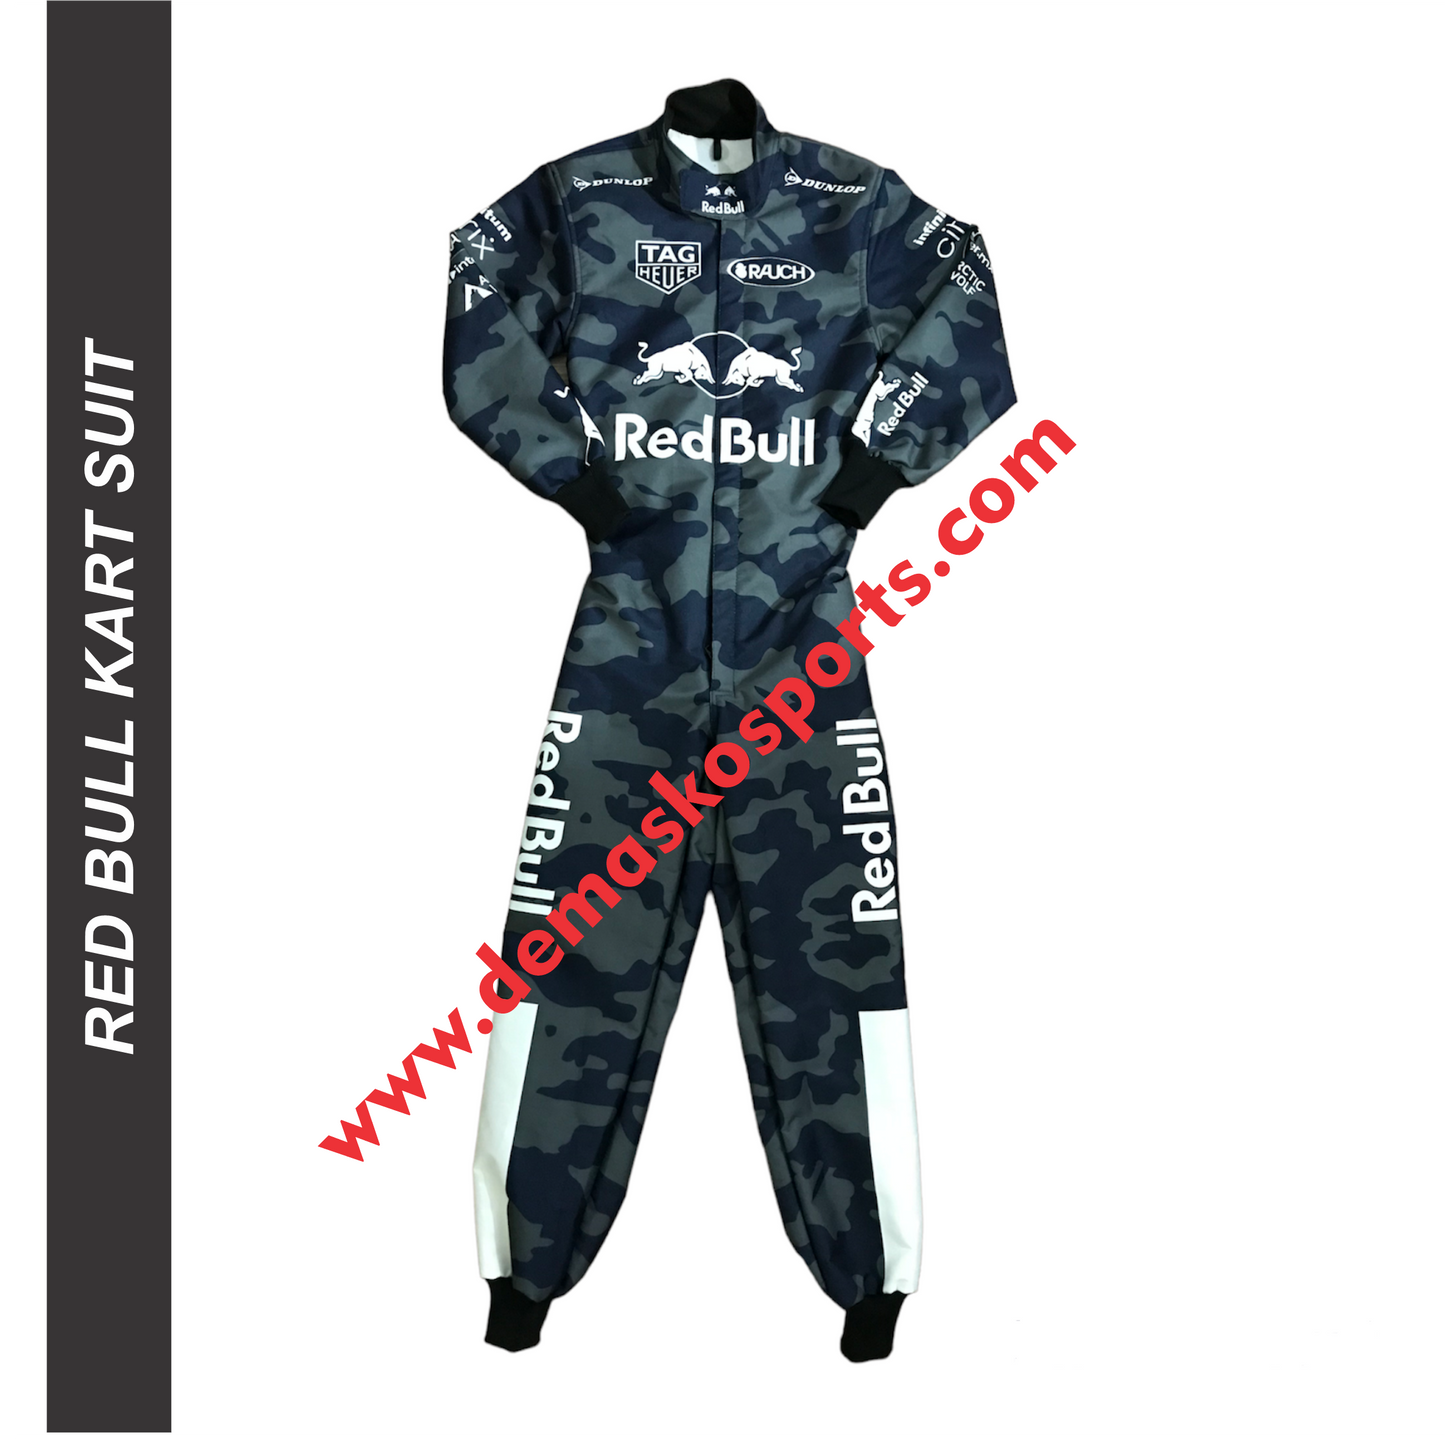 RedBull Honda F1 suit